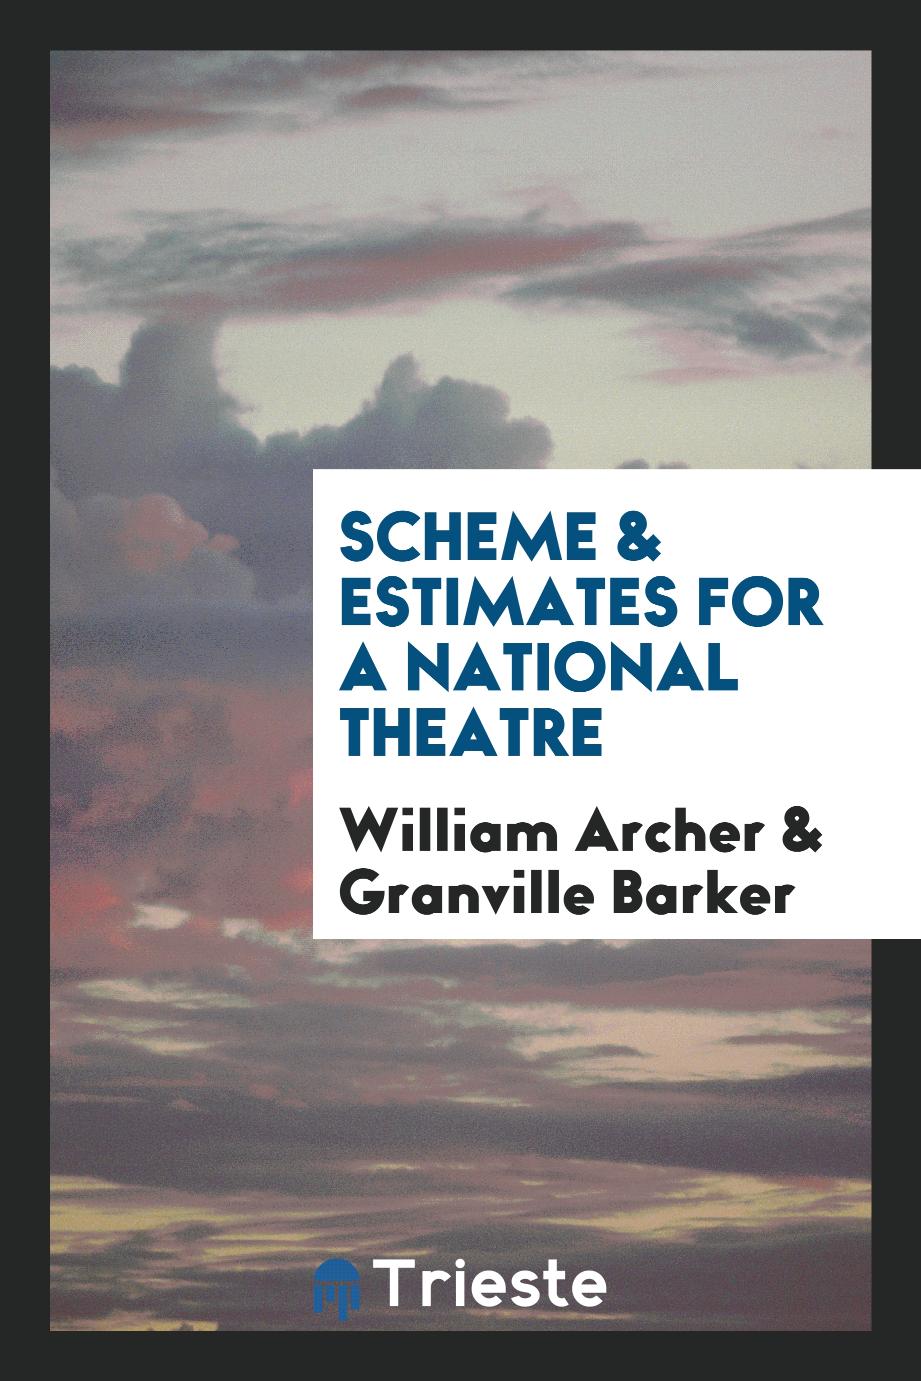 Scheme & estimates for a national theatre